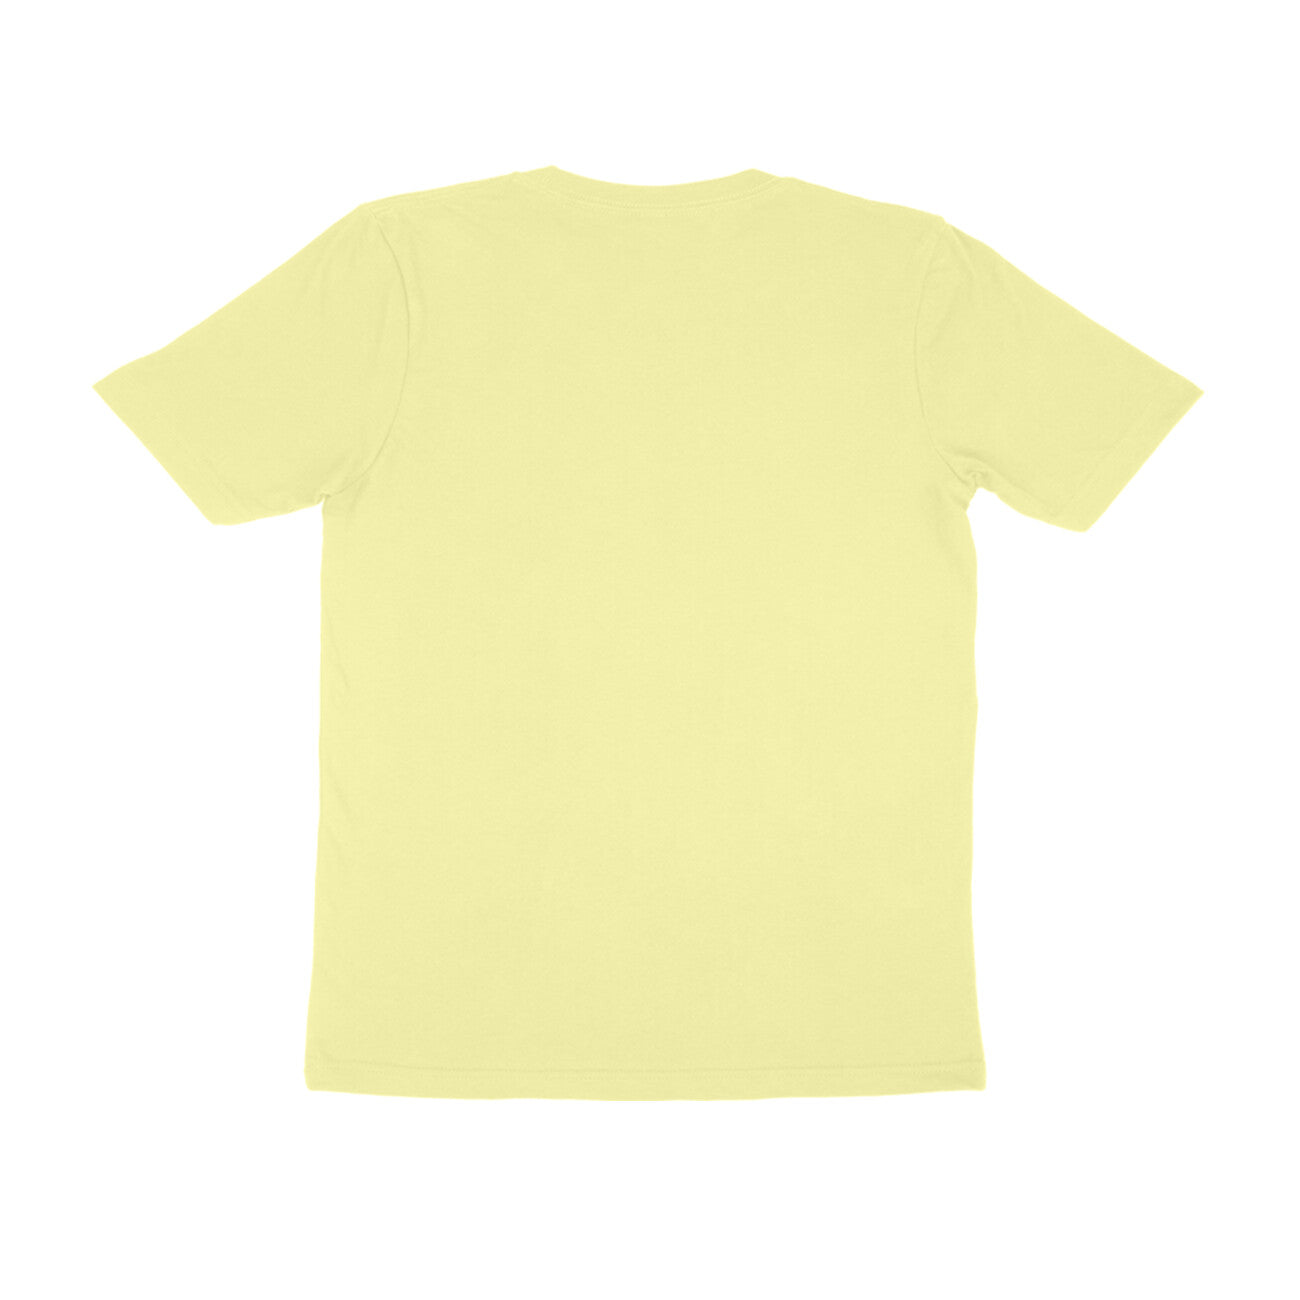 Aegon Branded Plain Cotton Half Sleeve Round Neck T-Shirt